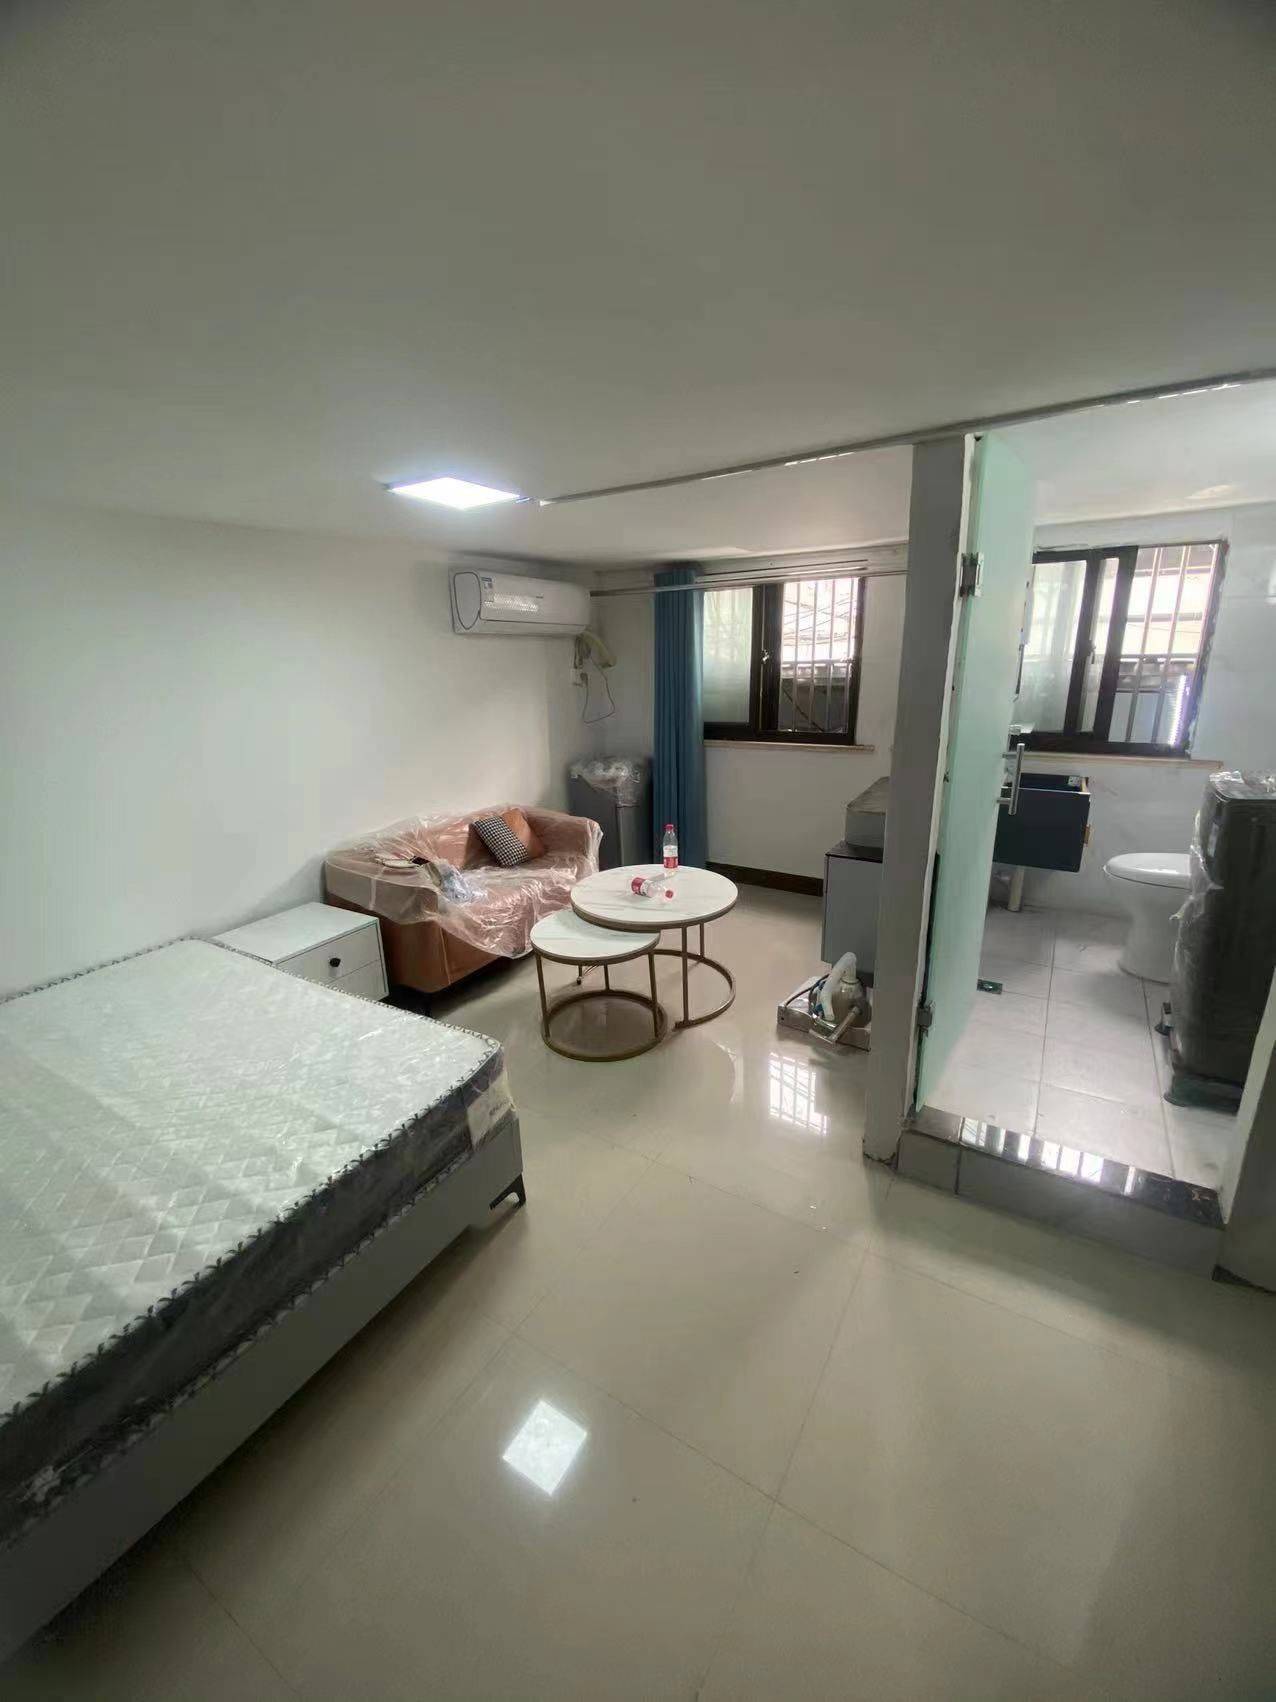 Suzhou-Gusu-Cozy Home,Clean&Comfy,No Gender Limit,Hustle & Bustle,“Friends”,Chilled